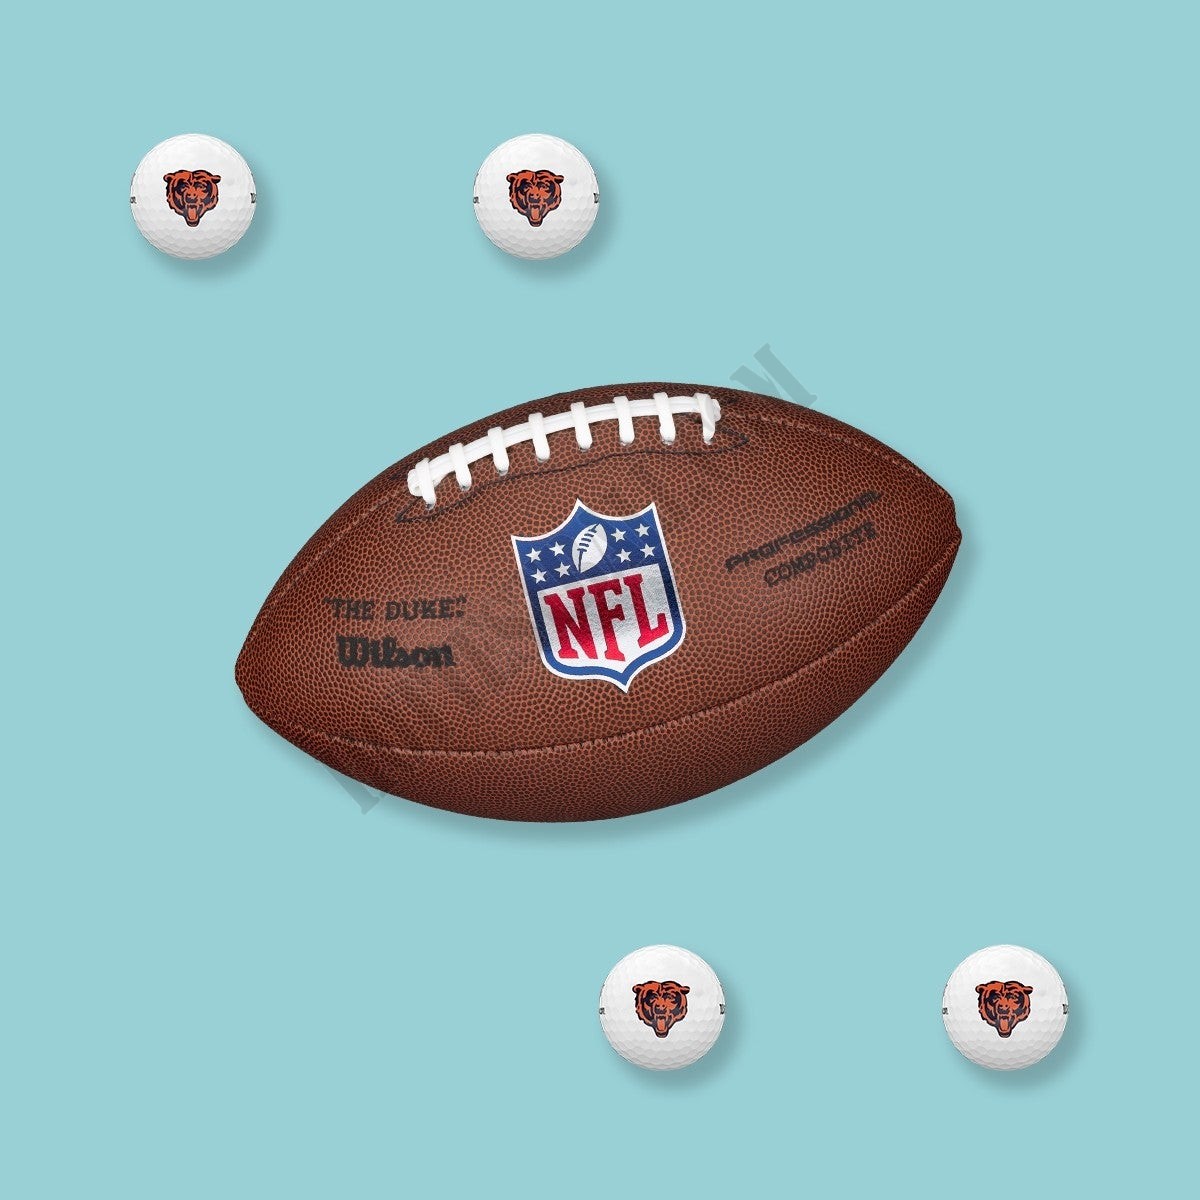 NFL Duke Replica Football Bundle - Pick Your Team - Wilson Discount Store - -0